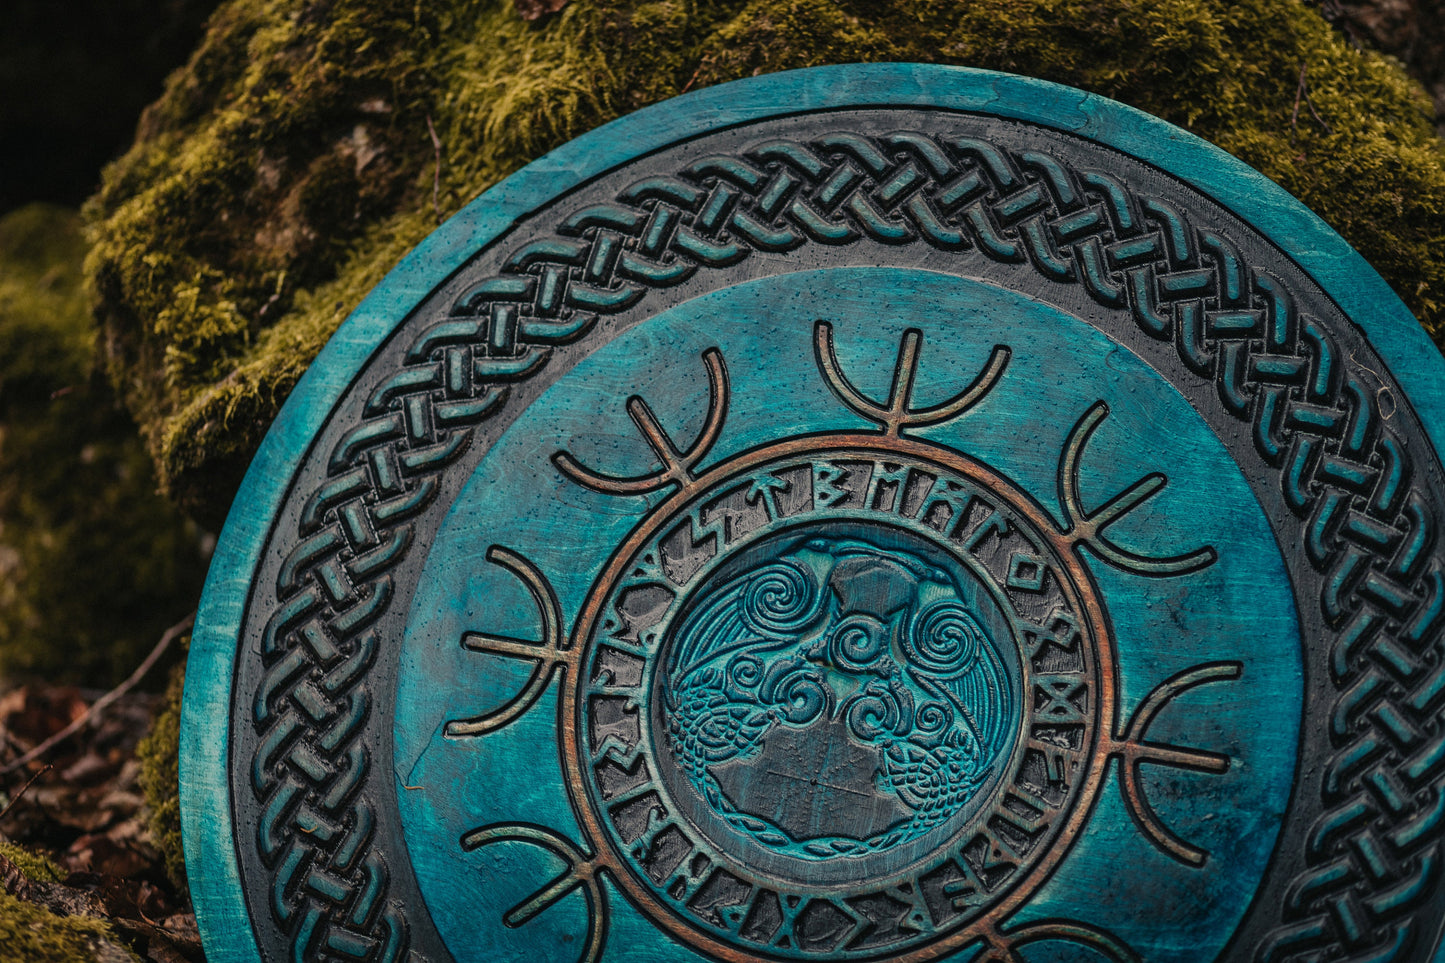 Viking Shield with Carved Odin's Raven Huginn and Muninn Symbols, 24"